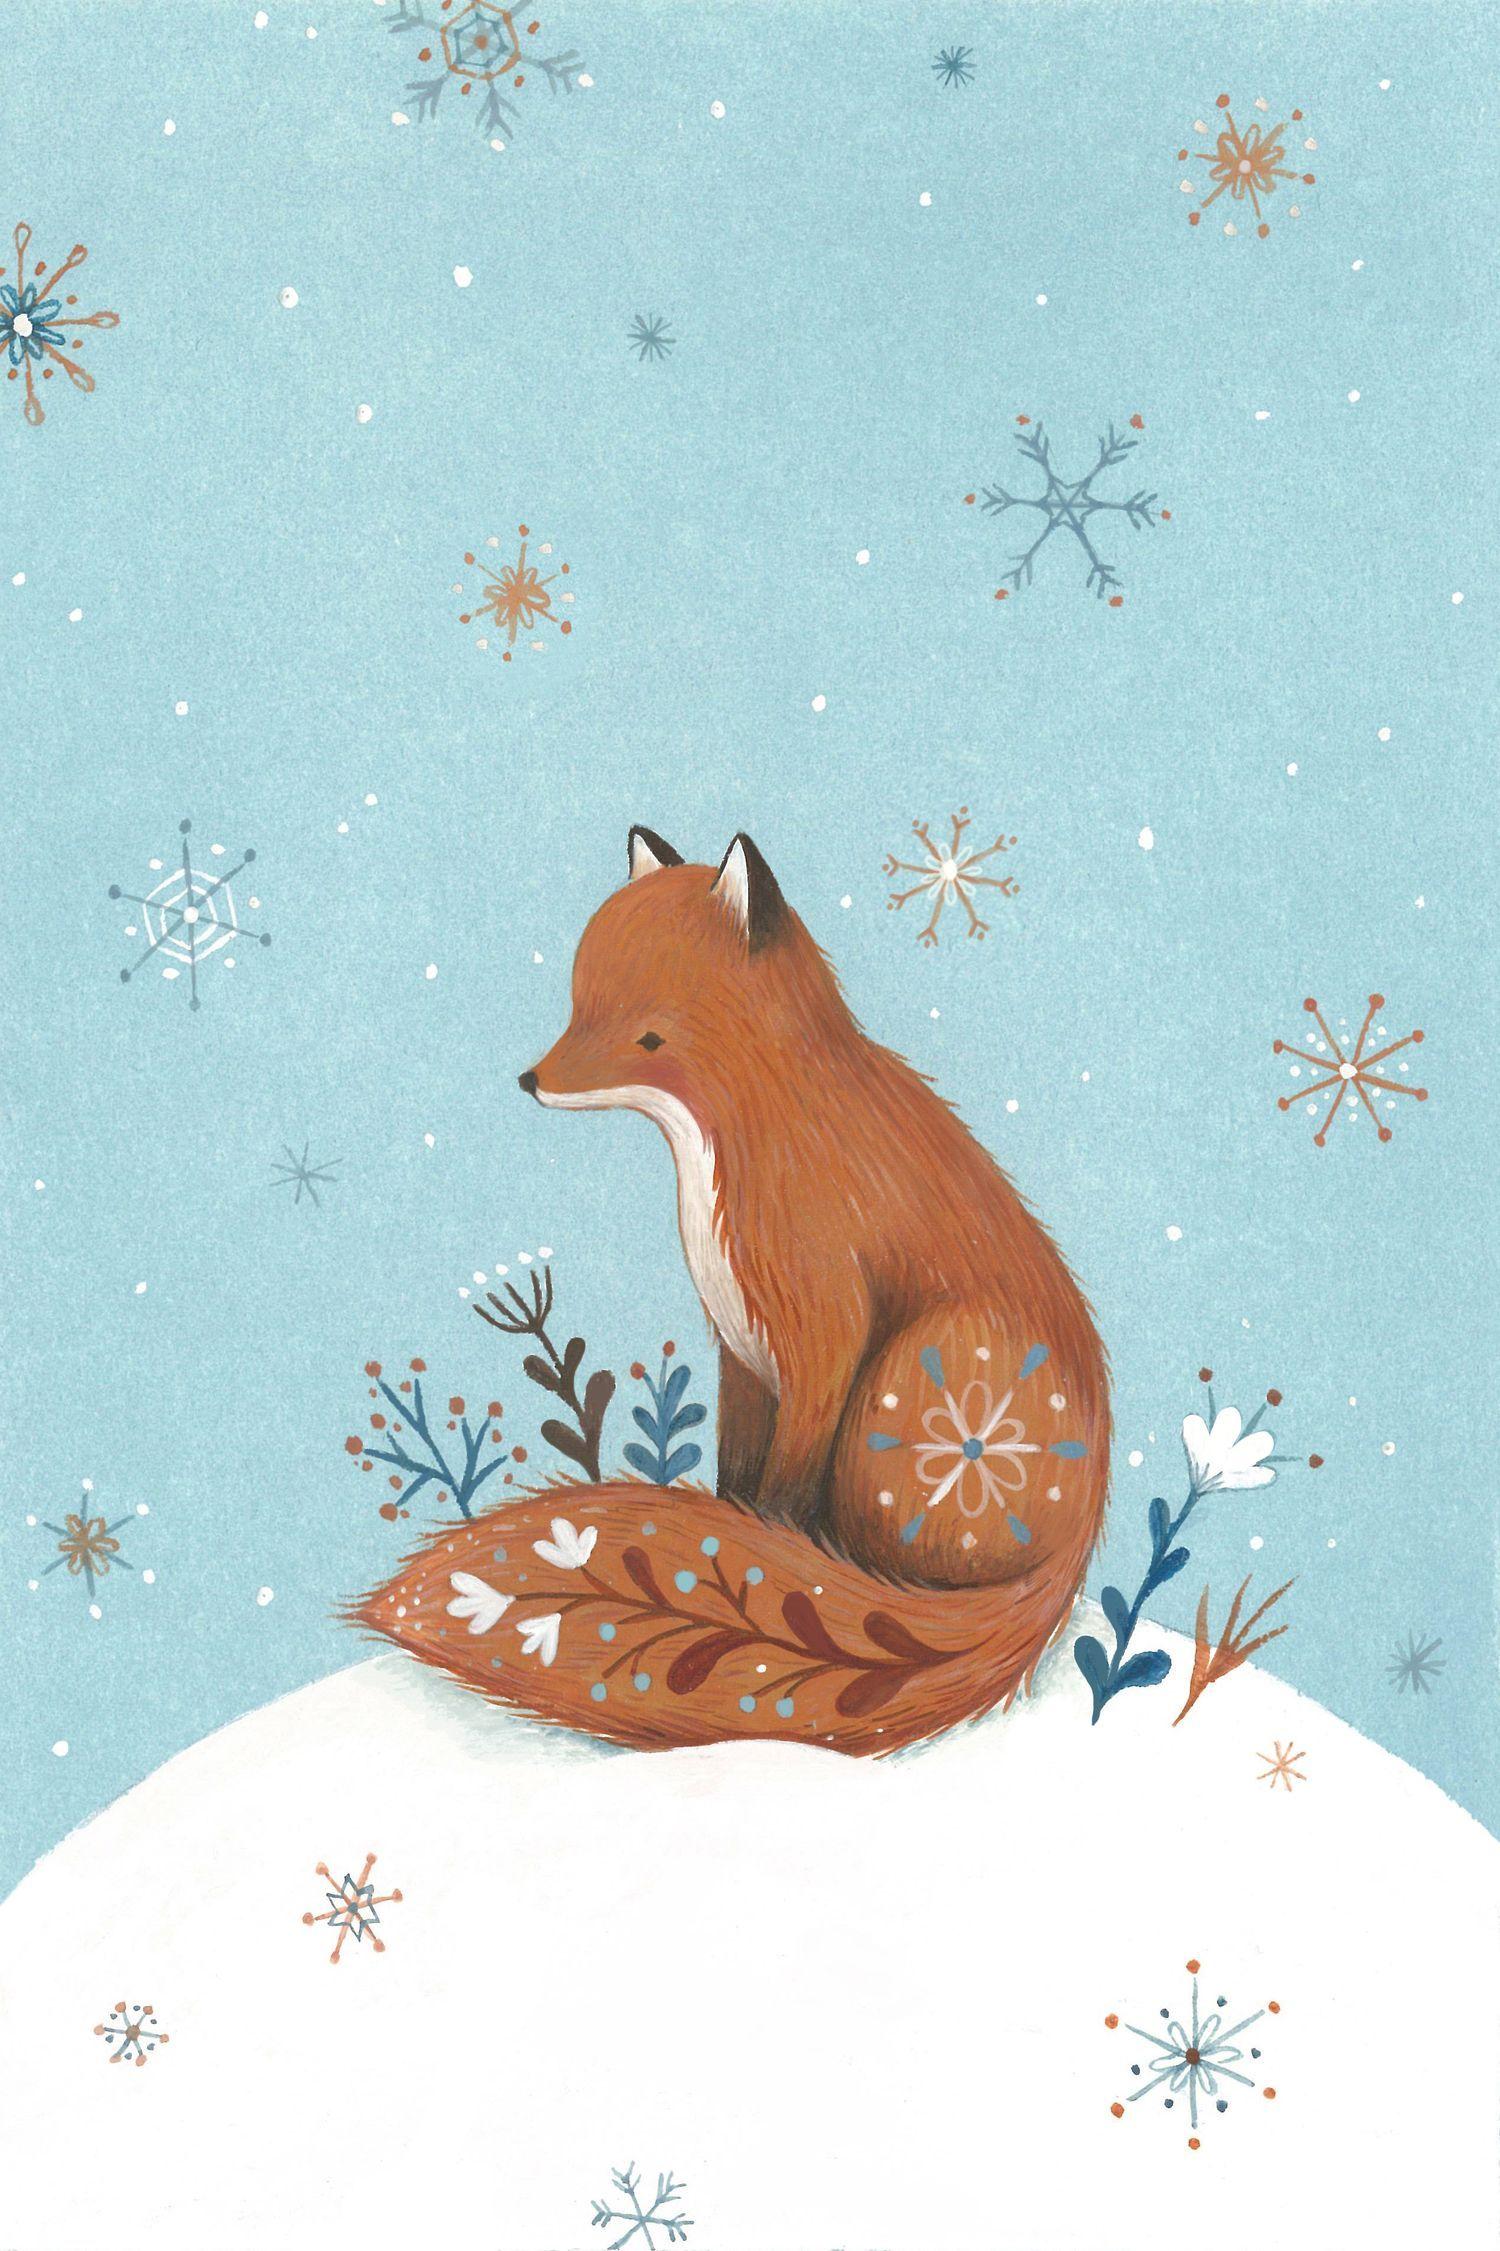 Baby Arctic Fox Wallpapers - Top Free Baby Arctic Fox Backgrounds ...